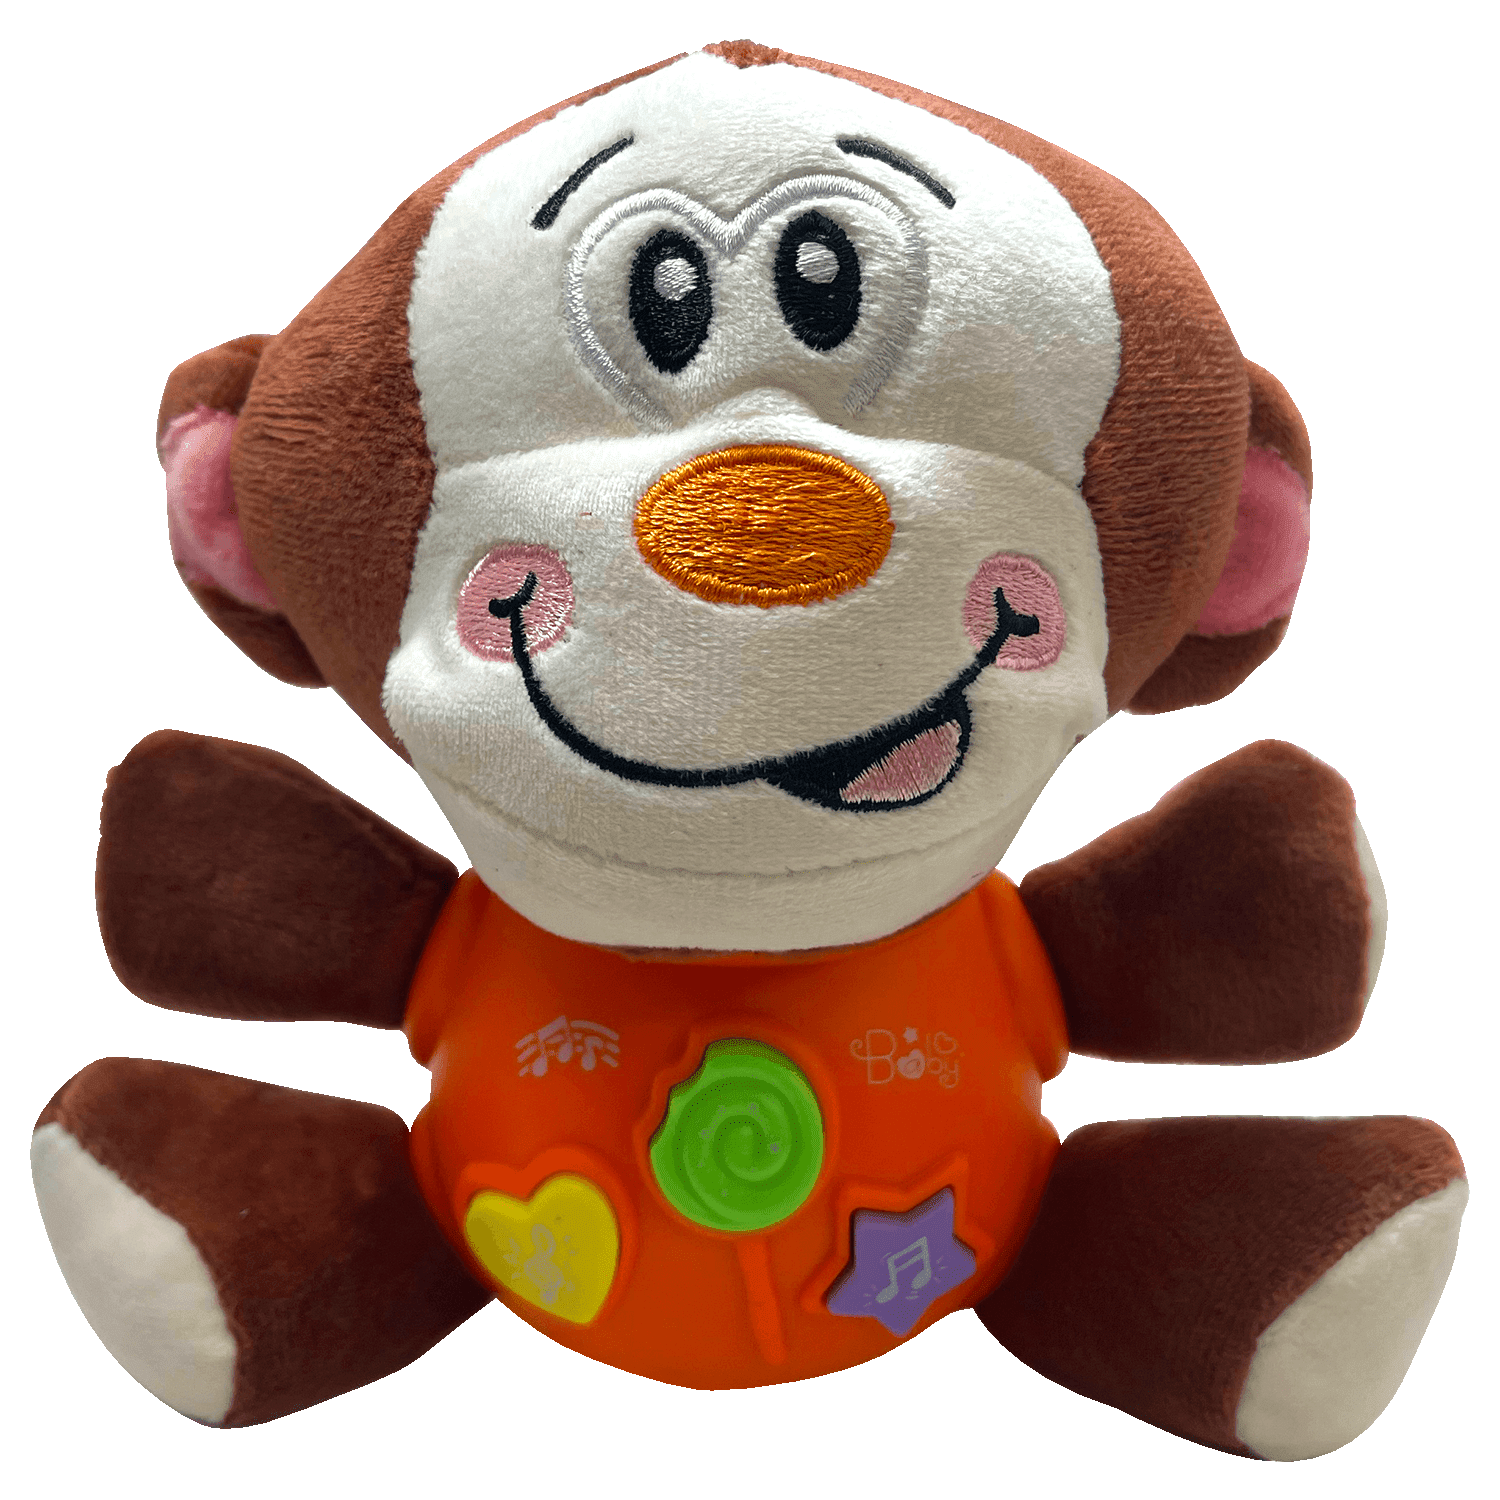 Alder Educational Plush Toy for Baby, Lights & Learning Monkey Musical Plush Toy for Baby 0 to 36 Months